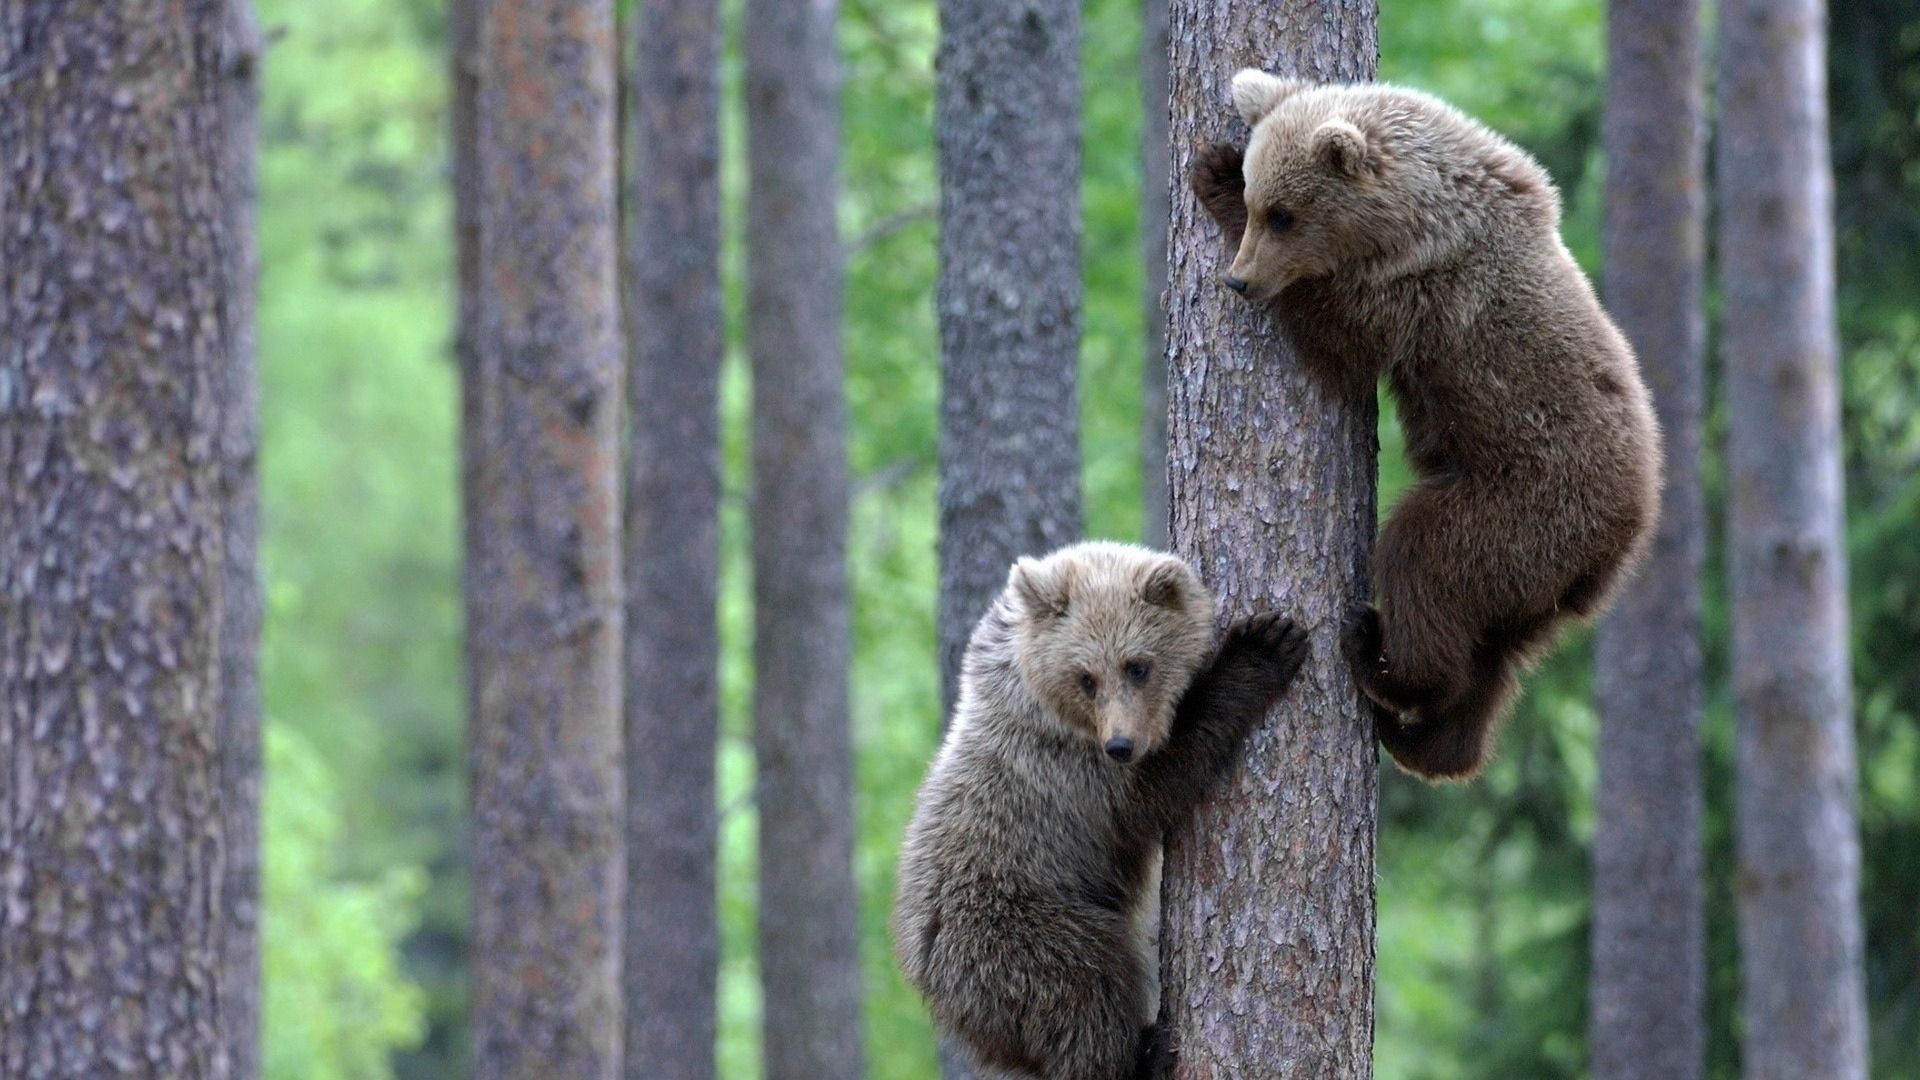 Playful bear cubs, Nature's innocence, Cute wildlife, Captivating expressions, 1920x1080 Full HD Desktop